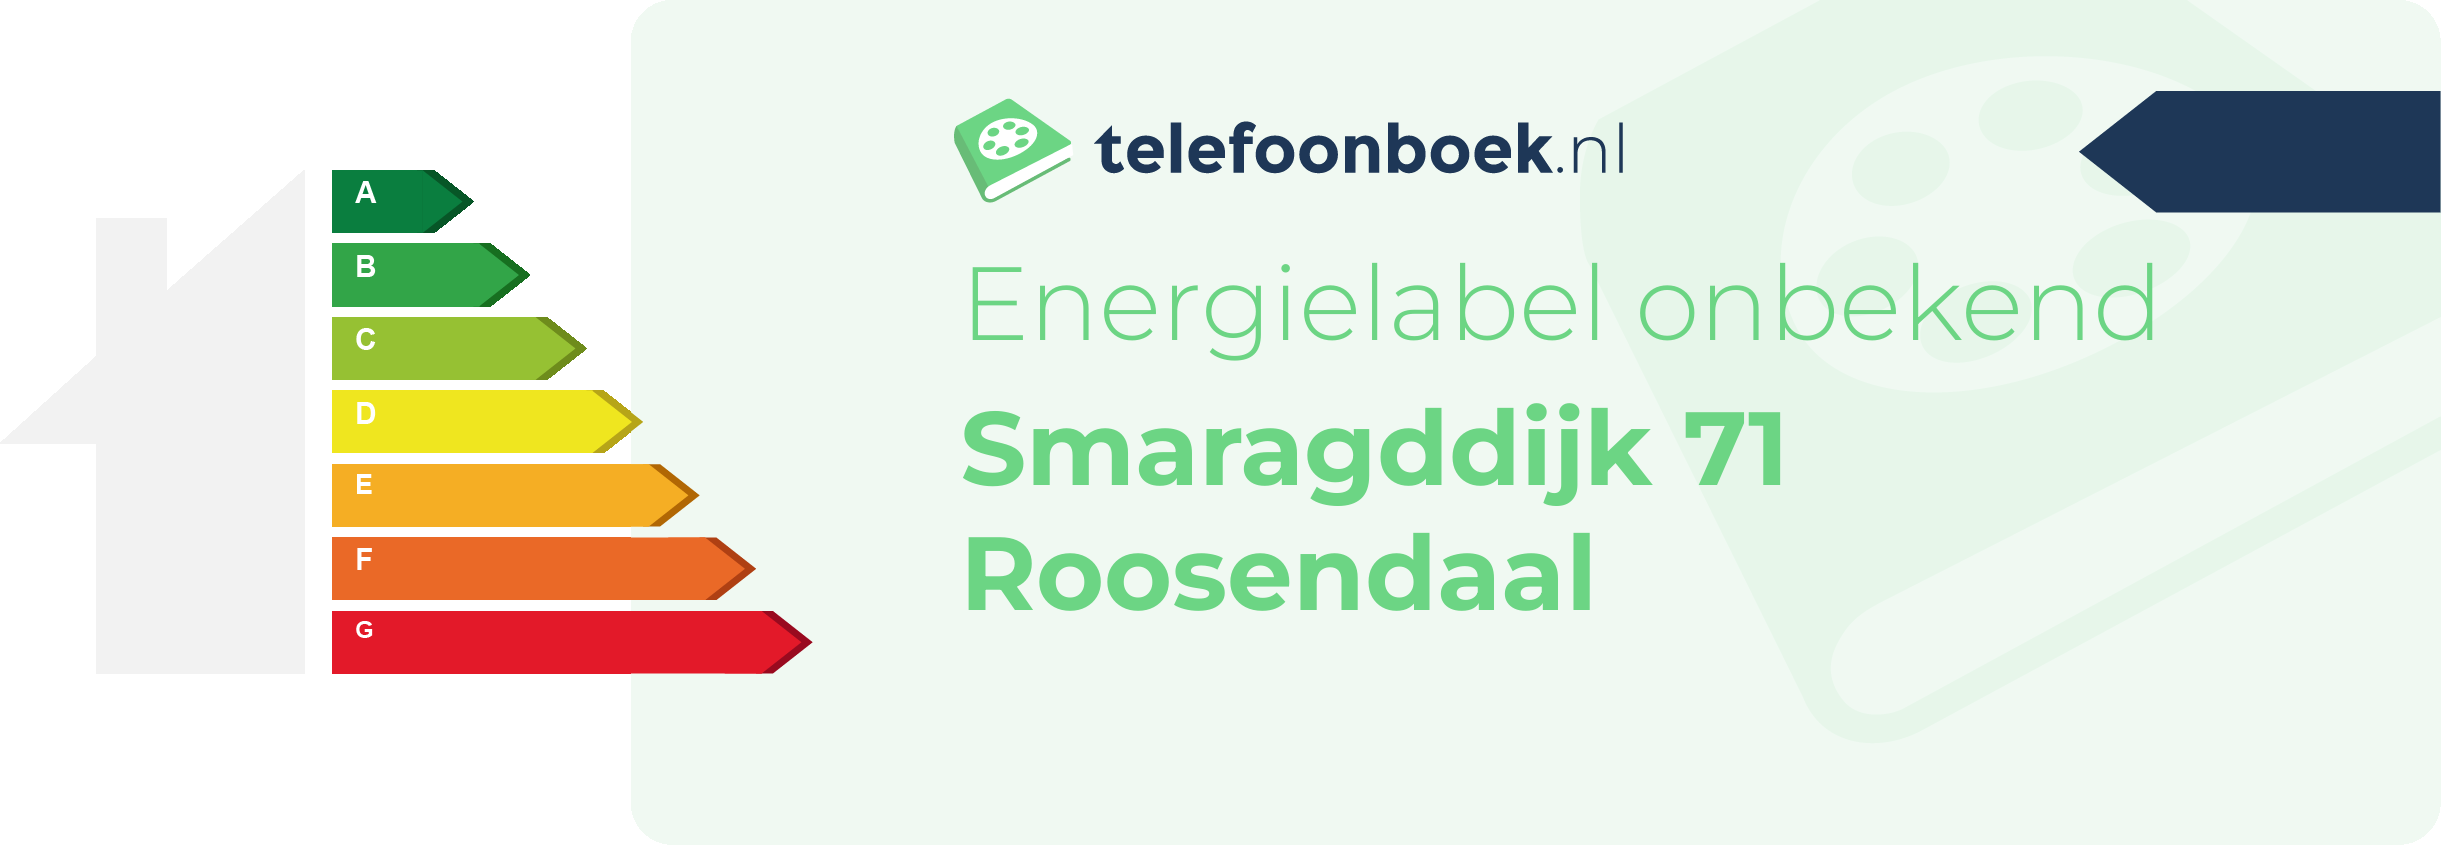 Energielabel Smaragddijk 71 Roosendaal